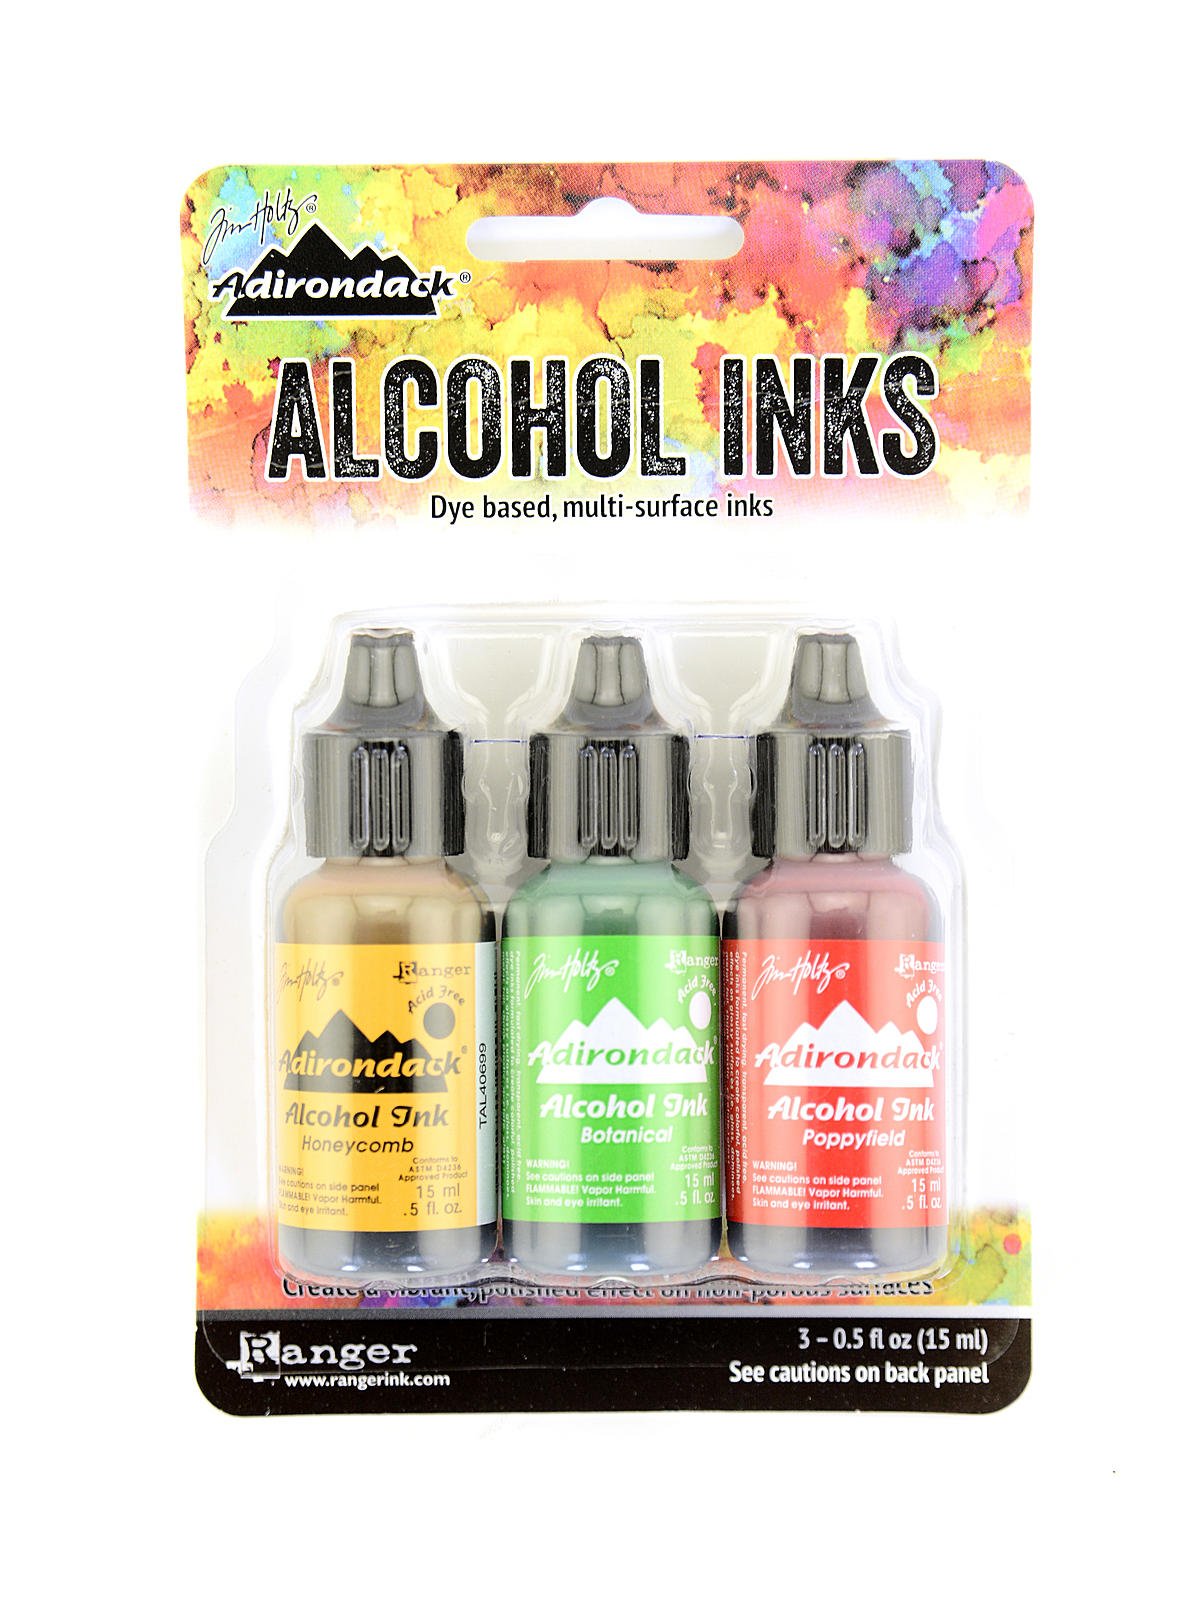 Tim Holtz Alcohol Ink 3 Pack - Orange/Yellow Spectrum